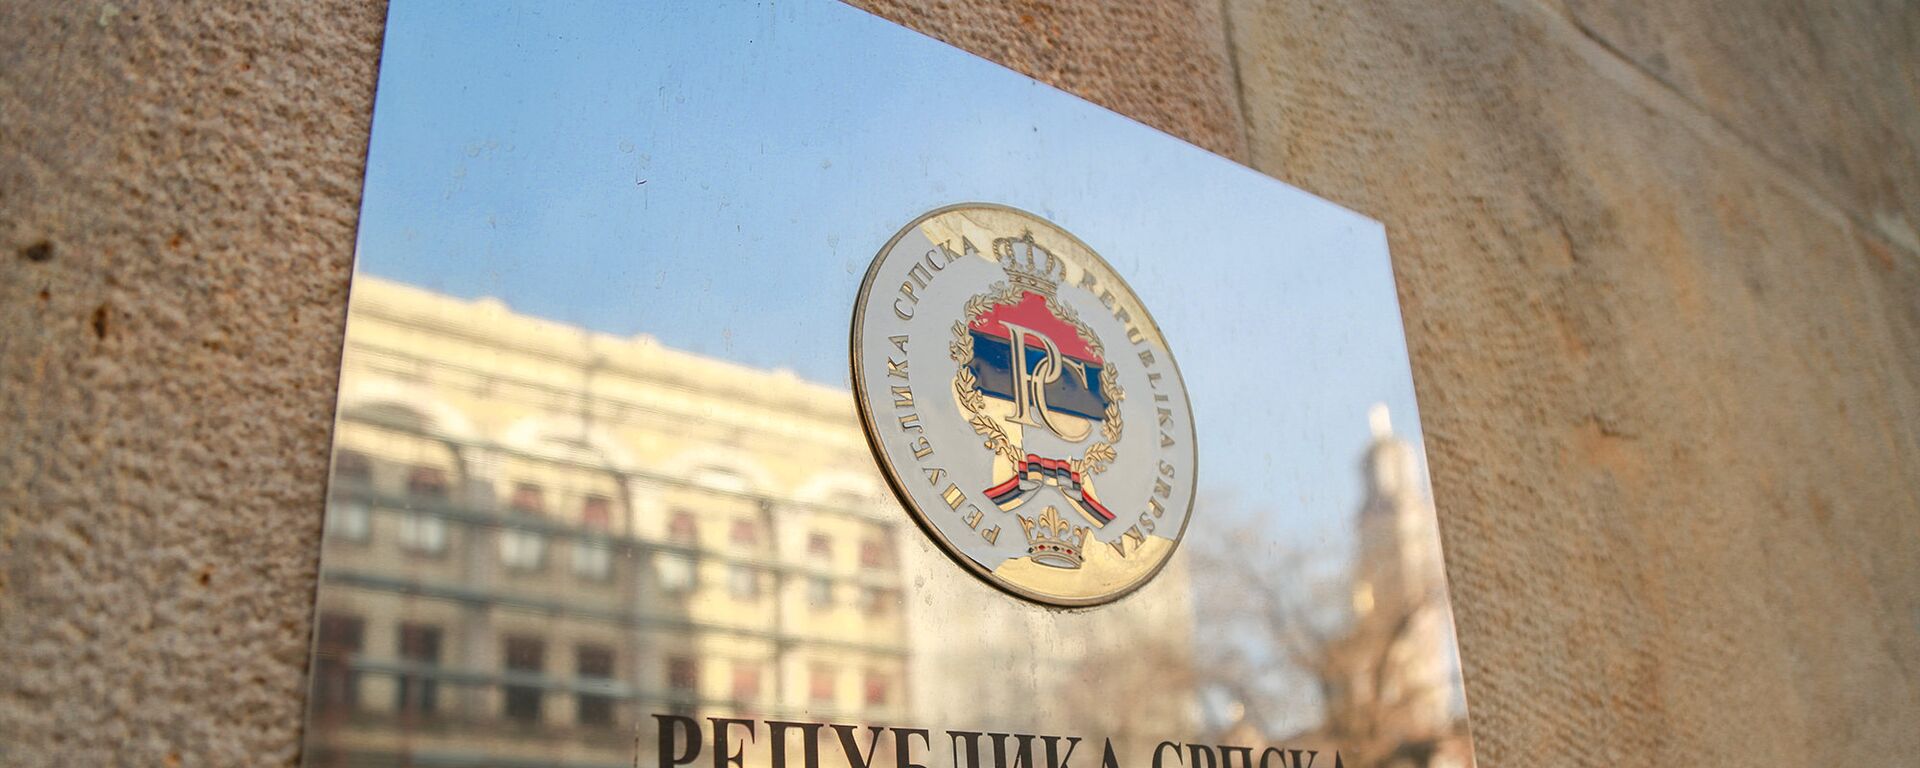 Tabla na zgradi predsednika RS - Sputnik Srbija, 1920, 22.02.2021